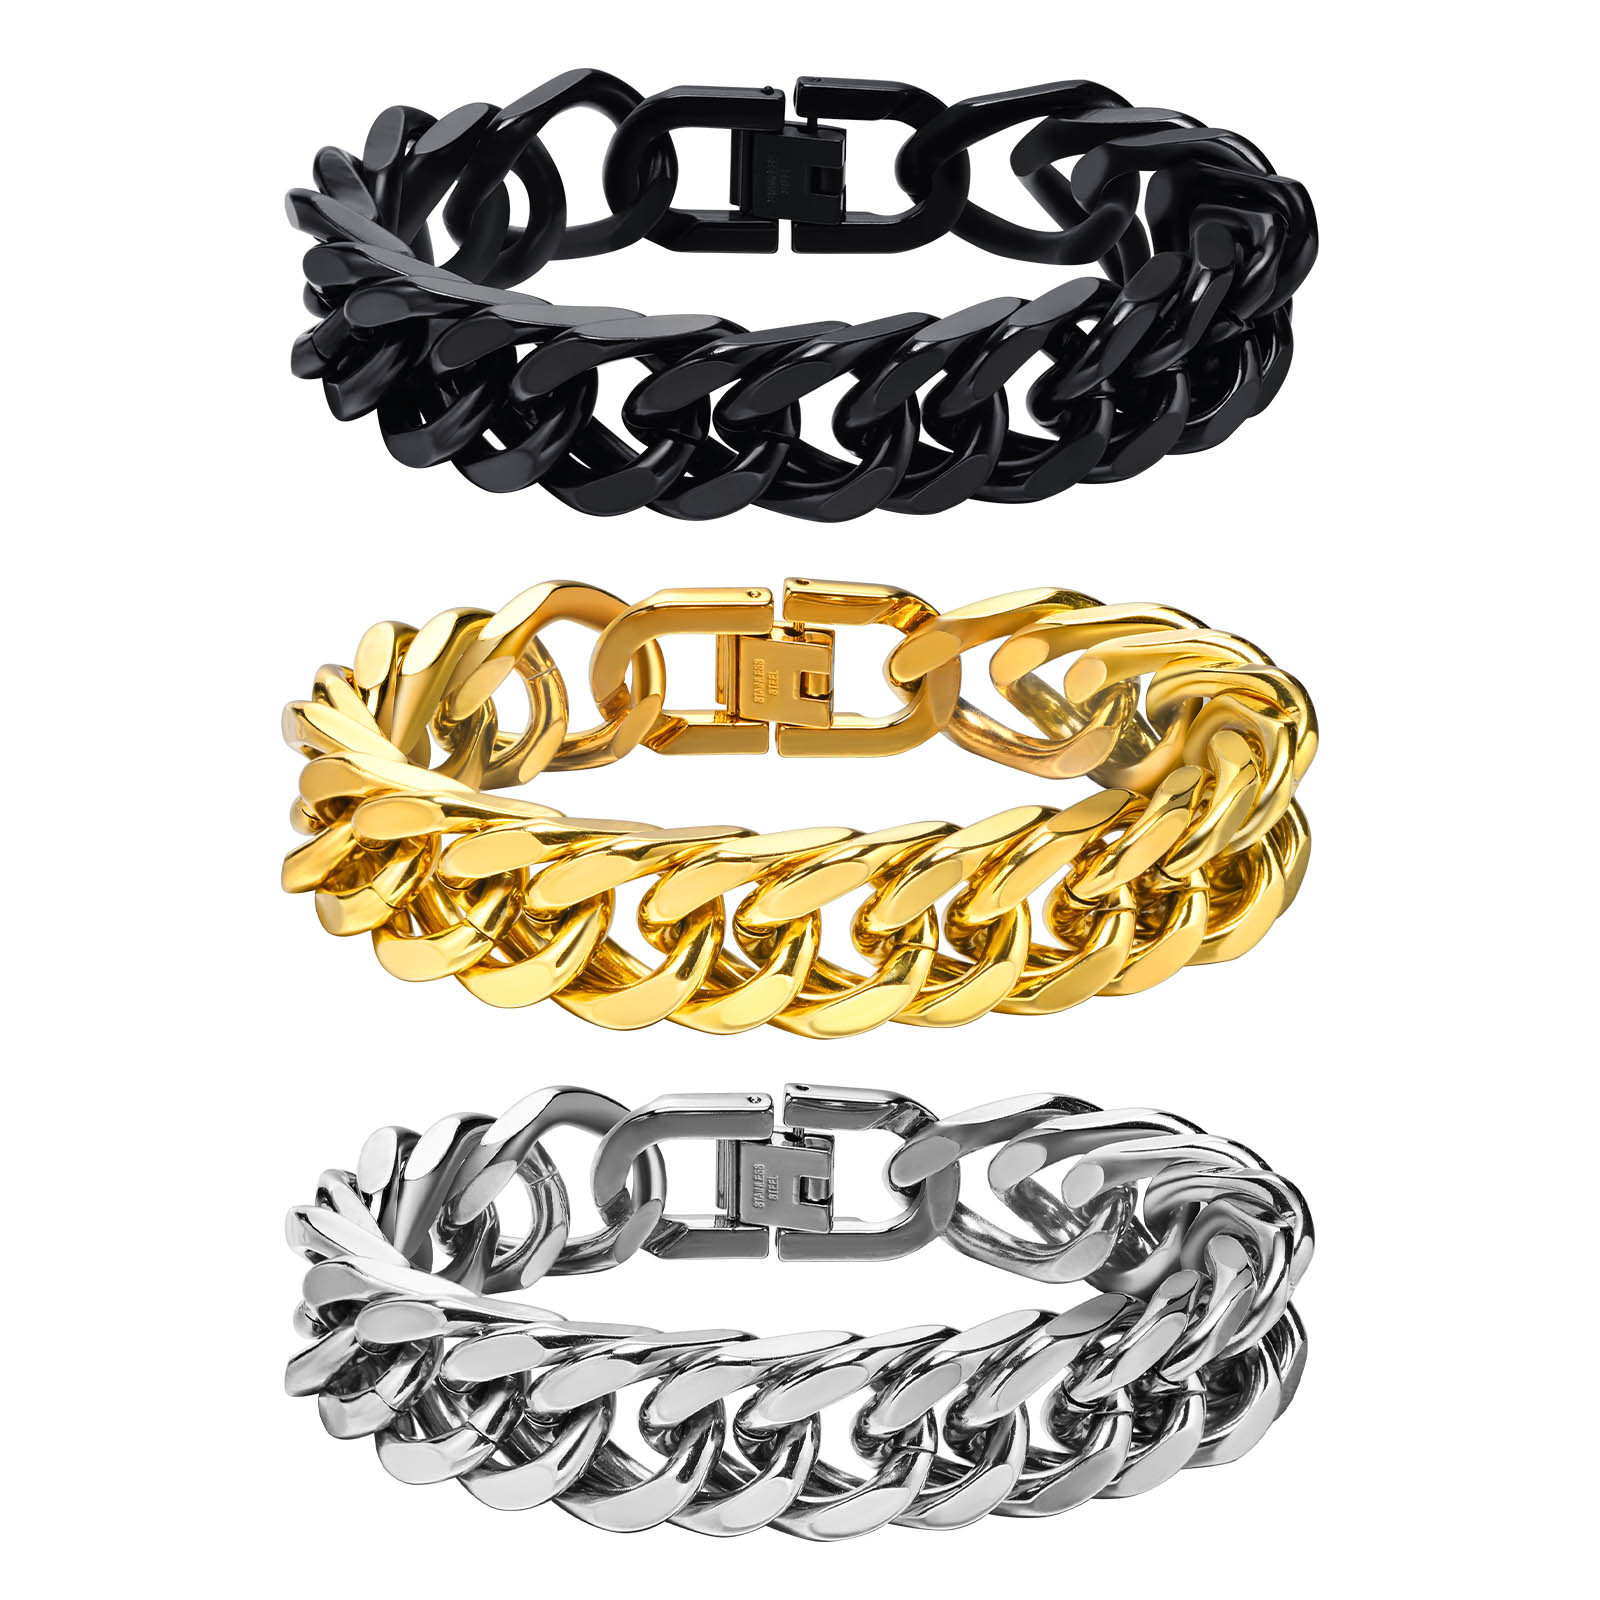 2:Black chain width 15MM; bracelet total length 21.5 cm